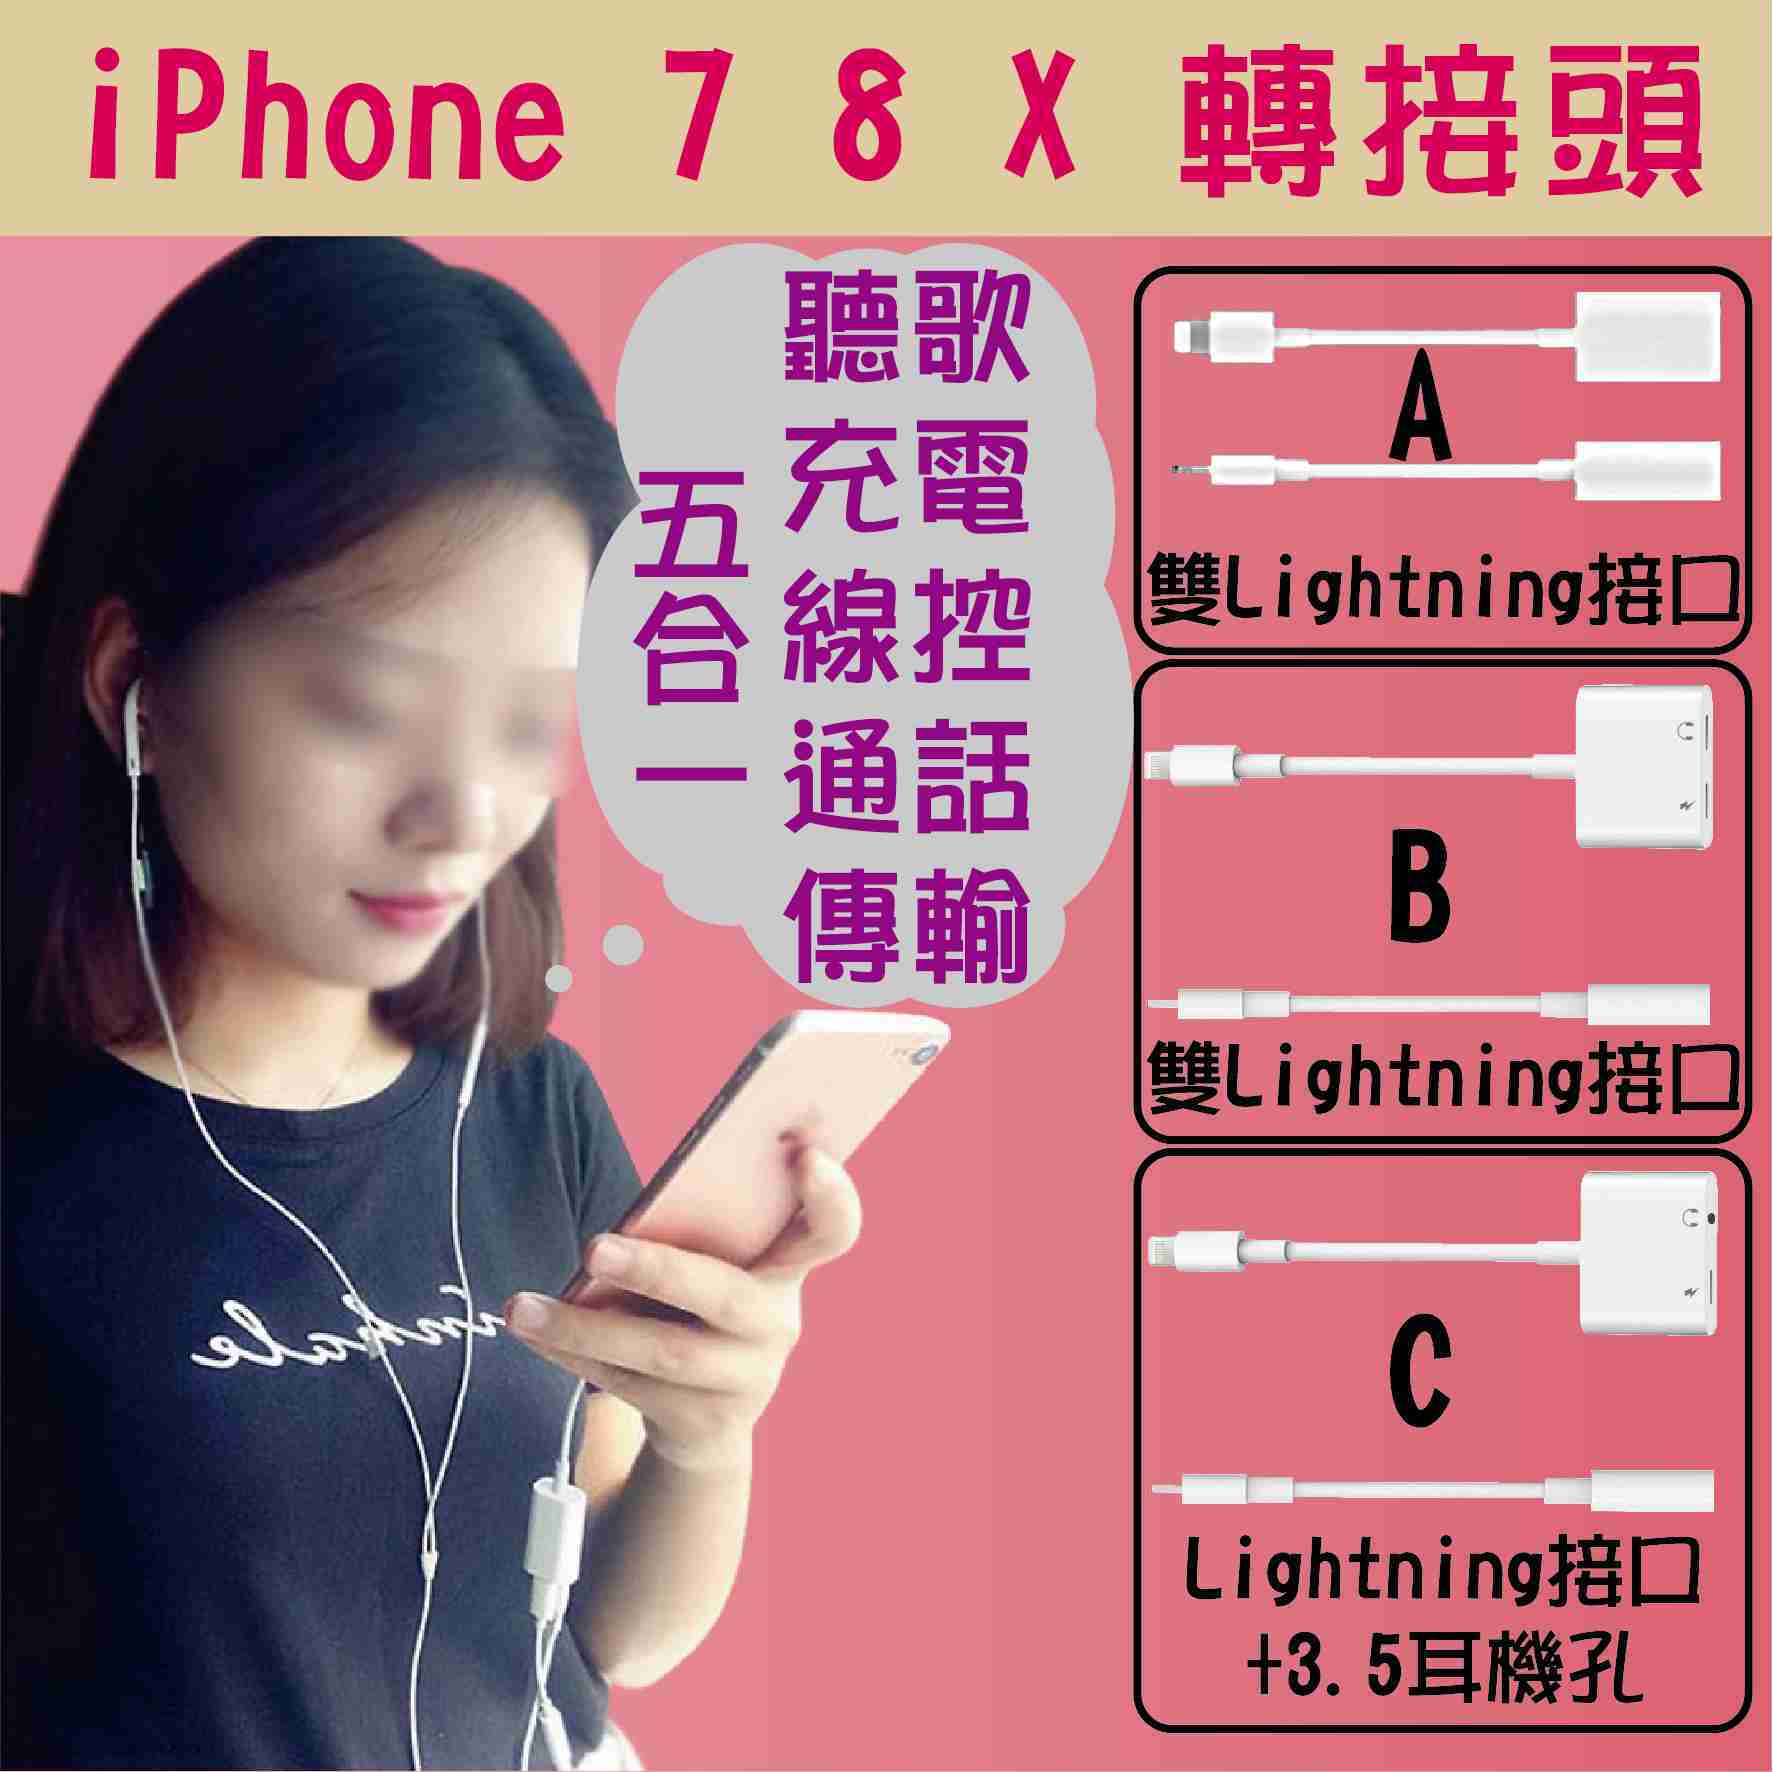 #271【A款/B款/C款】iPhone 7 8 X 雙Lightning轉接頭 可通話 聽音樂 耳機線控【愛尚生活】